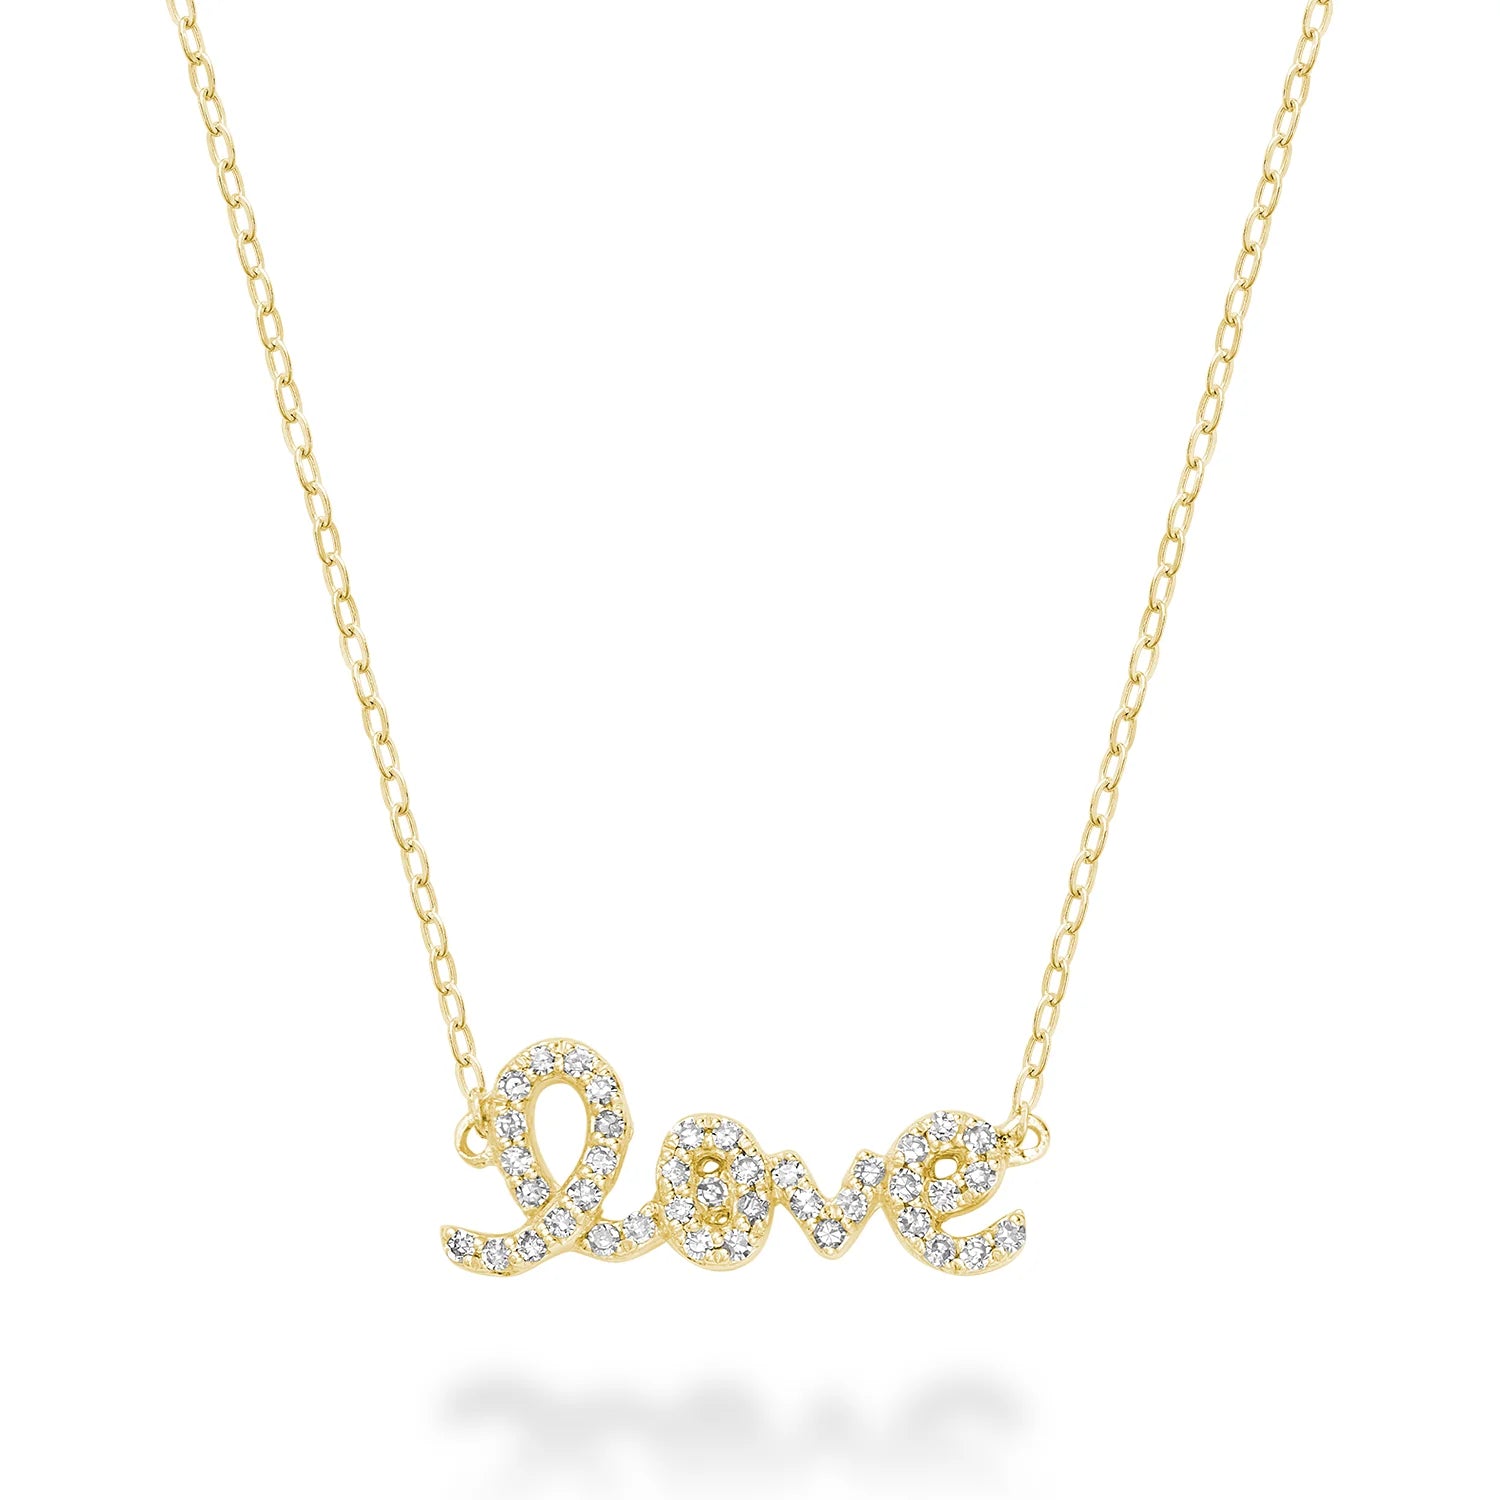 The Love Diamond Necklace